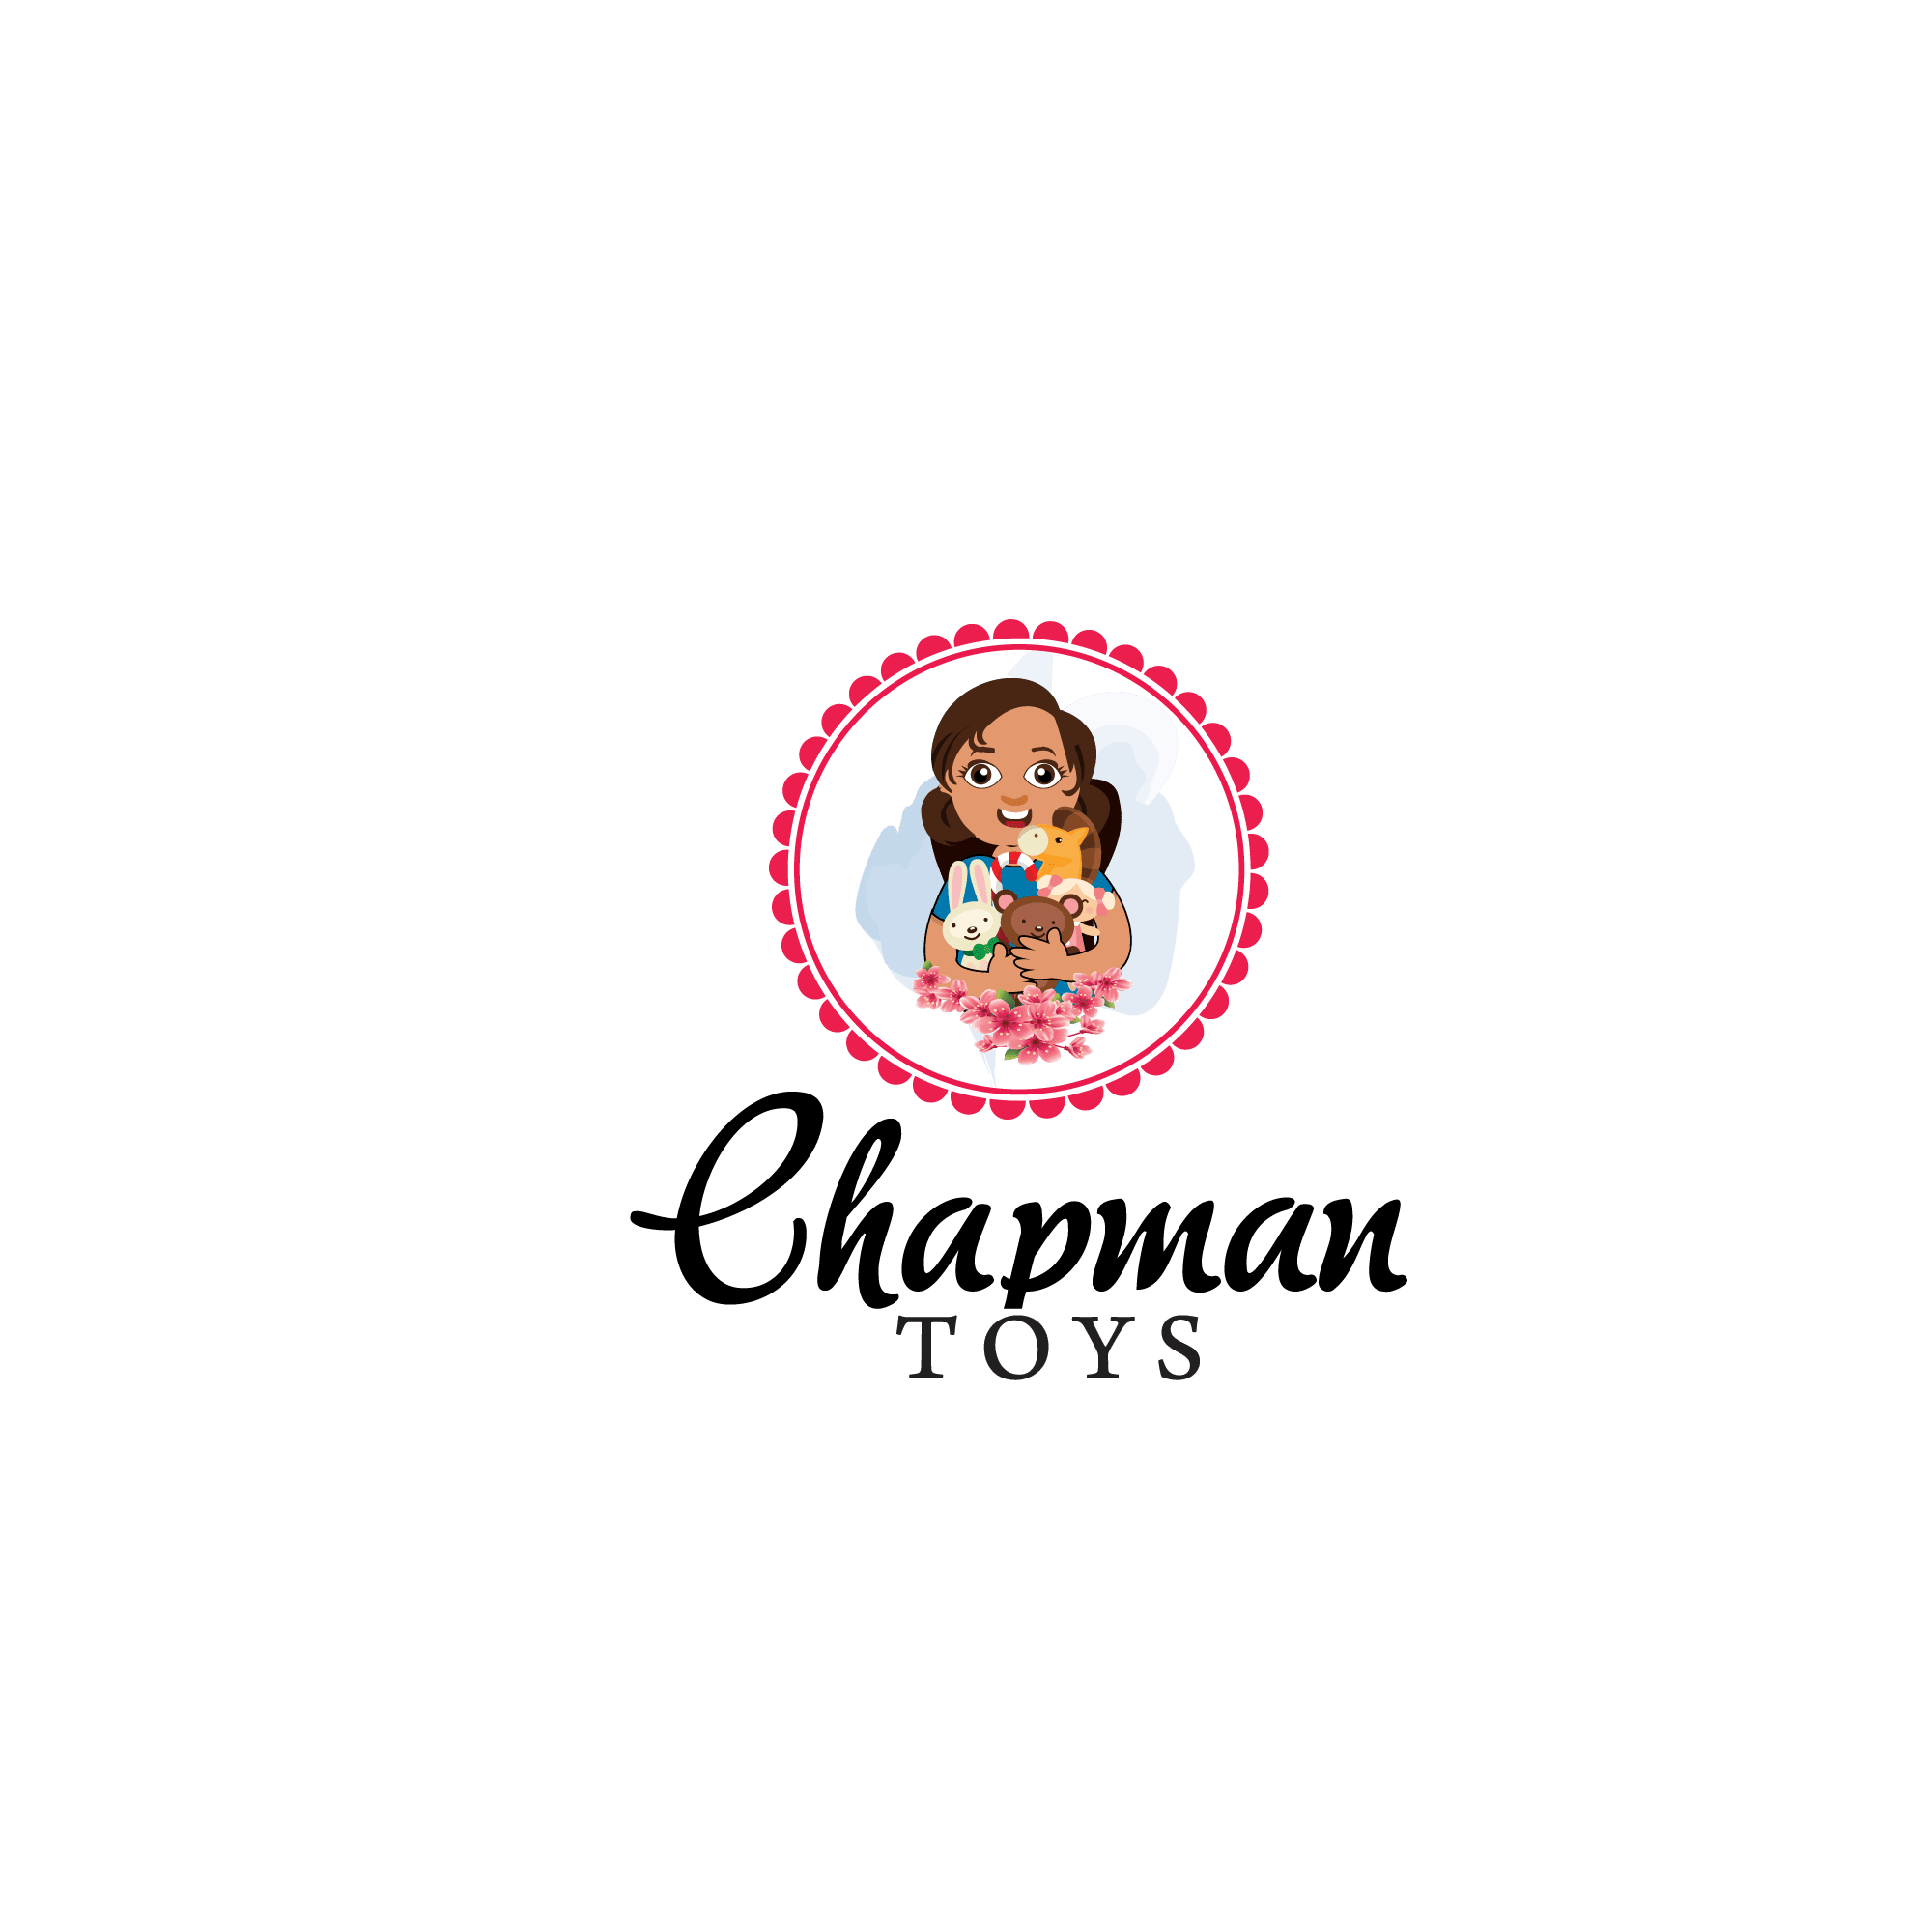 Chapman Toys